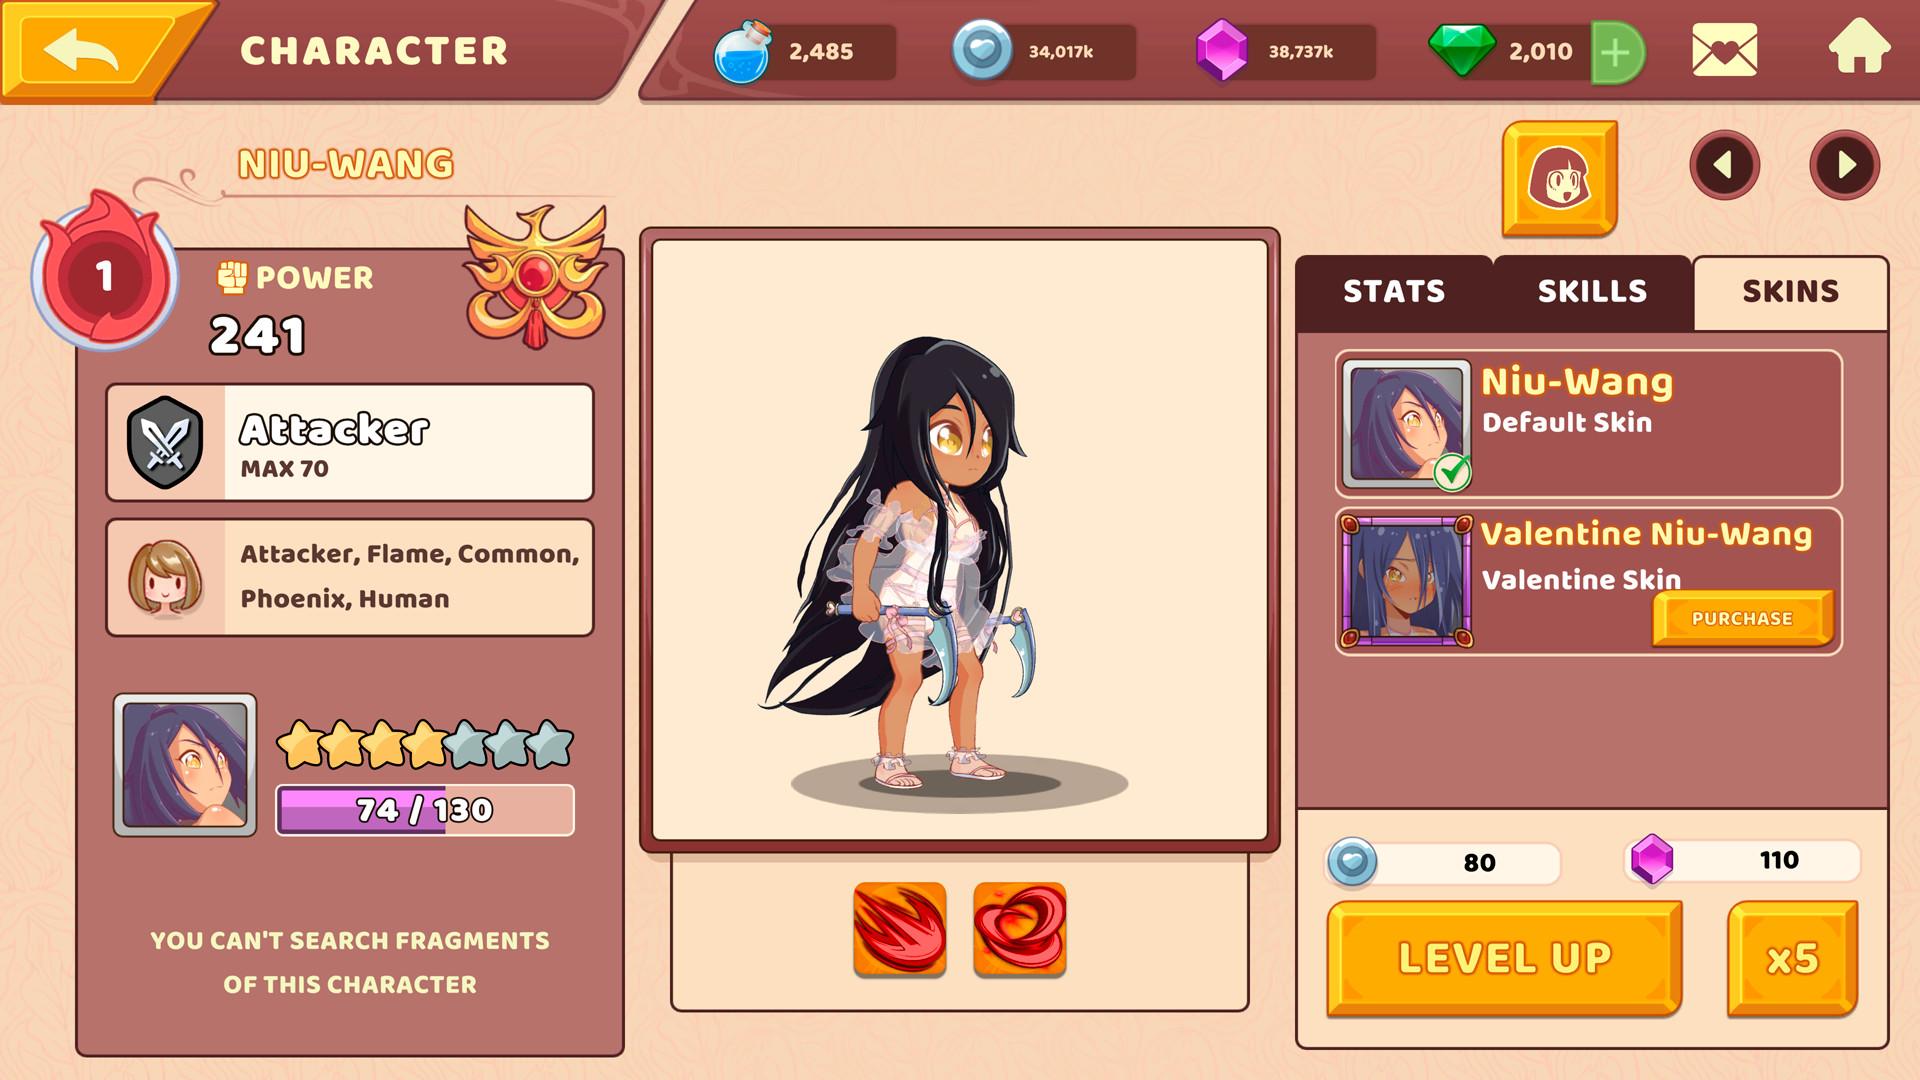 Screenshot №6 from game Eros Fantasy